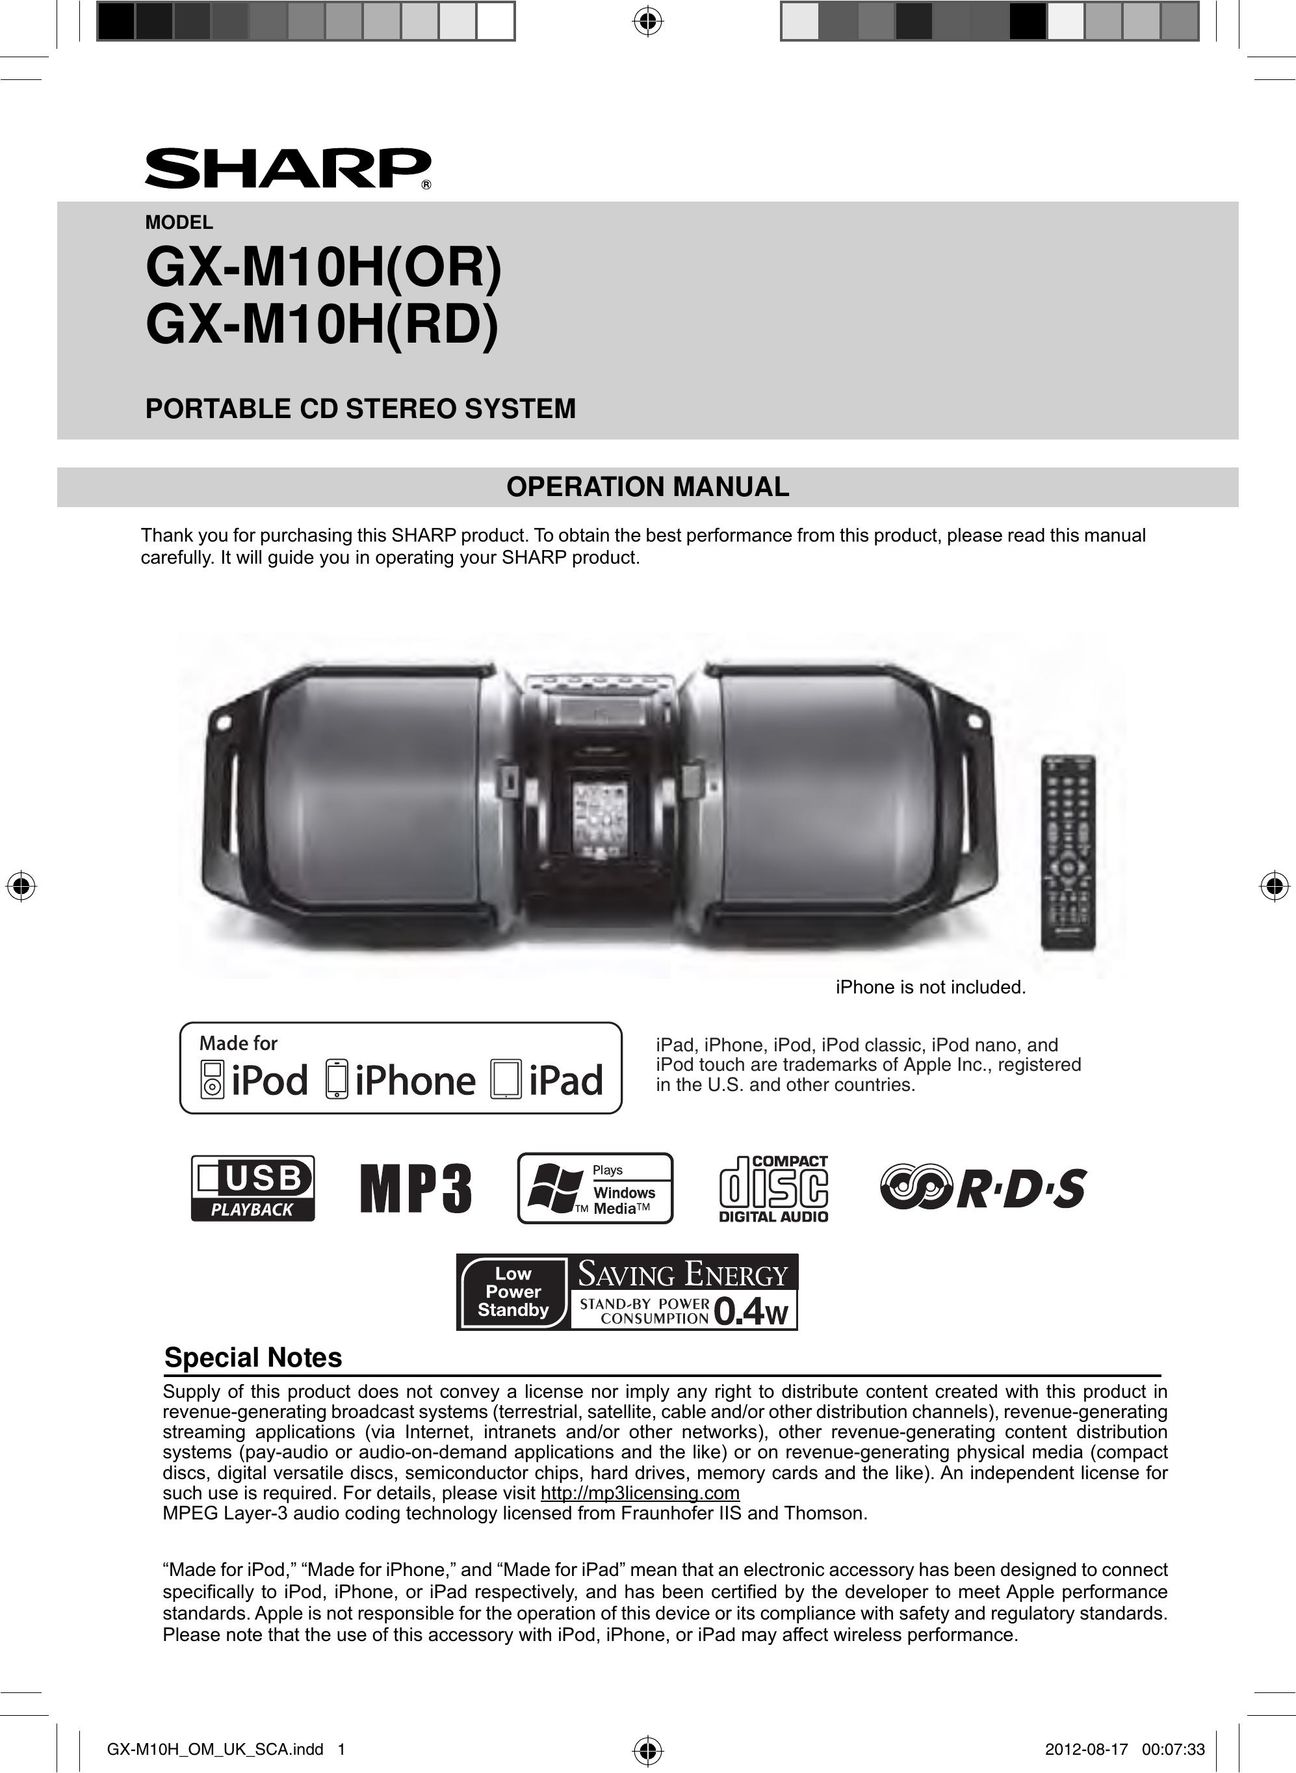 Sharp GX-M10H(OR) MP3 Player User Manual